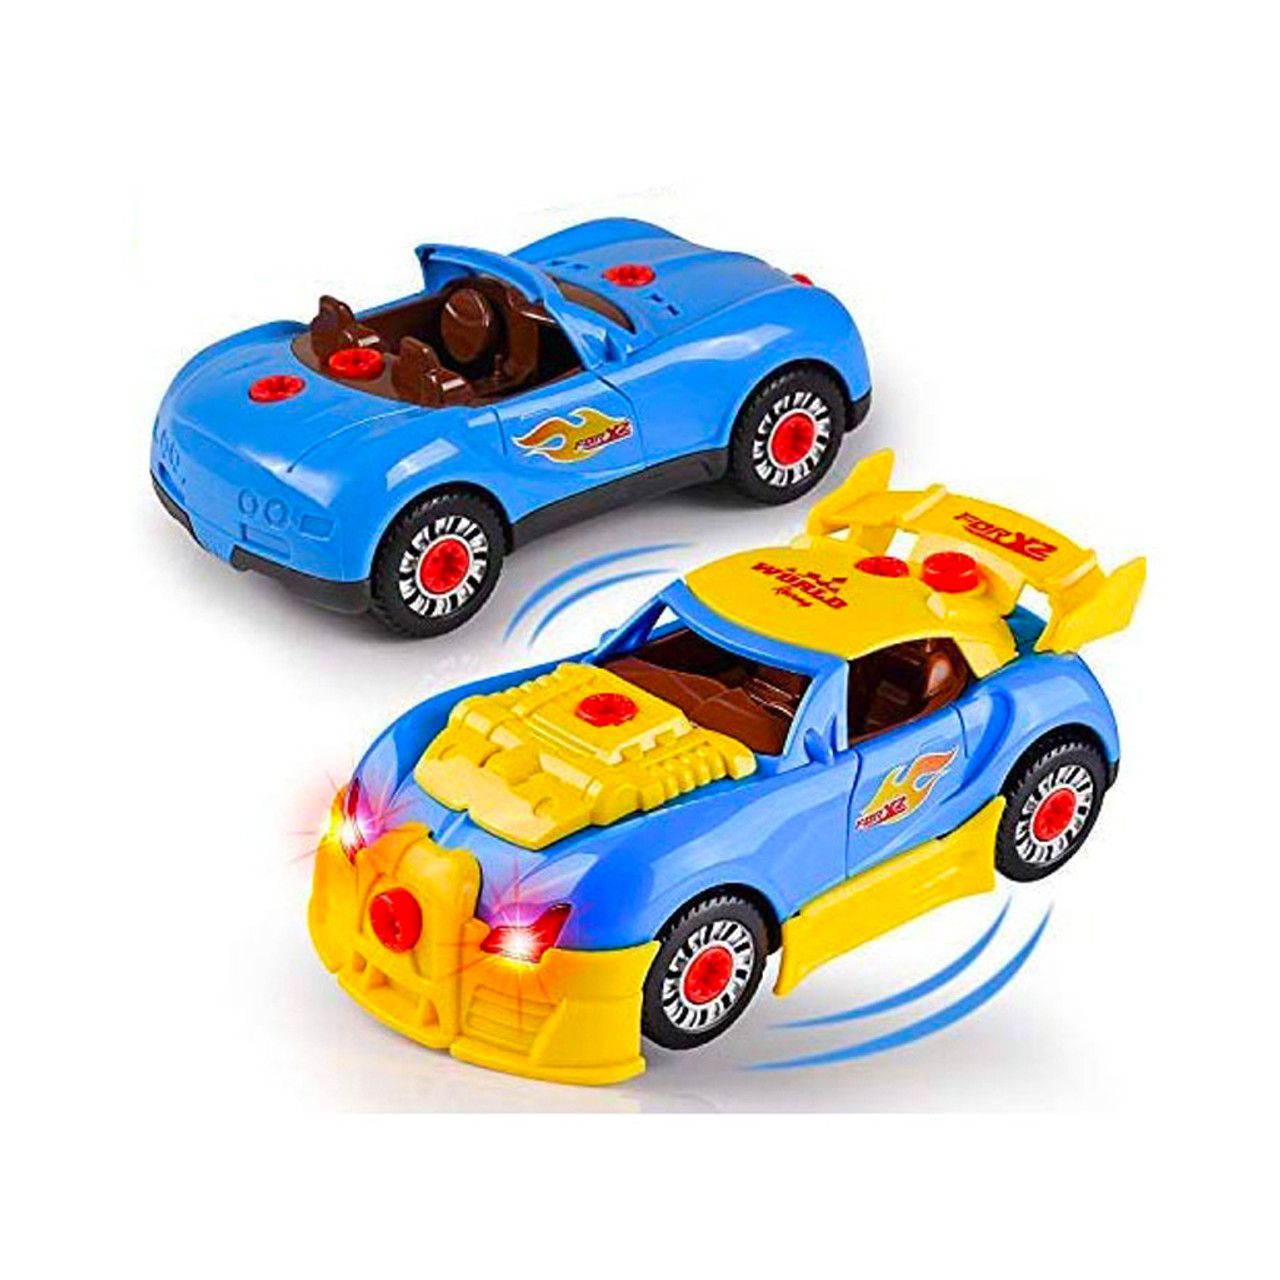 Kids’ Take Apart Race Car product image